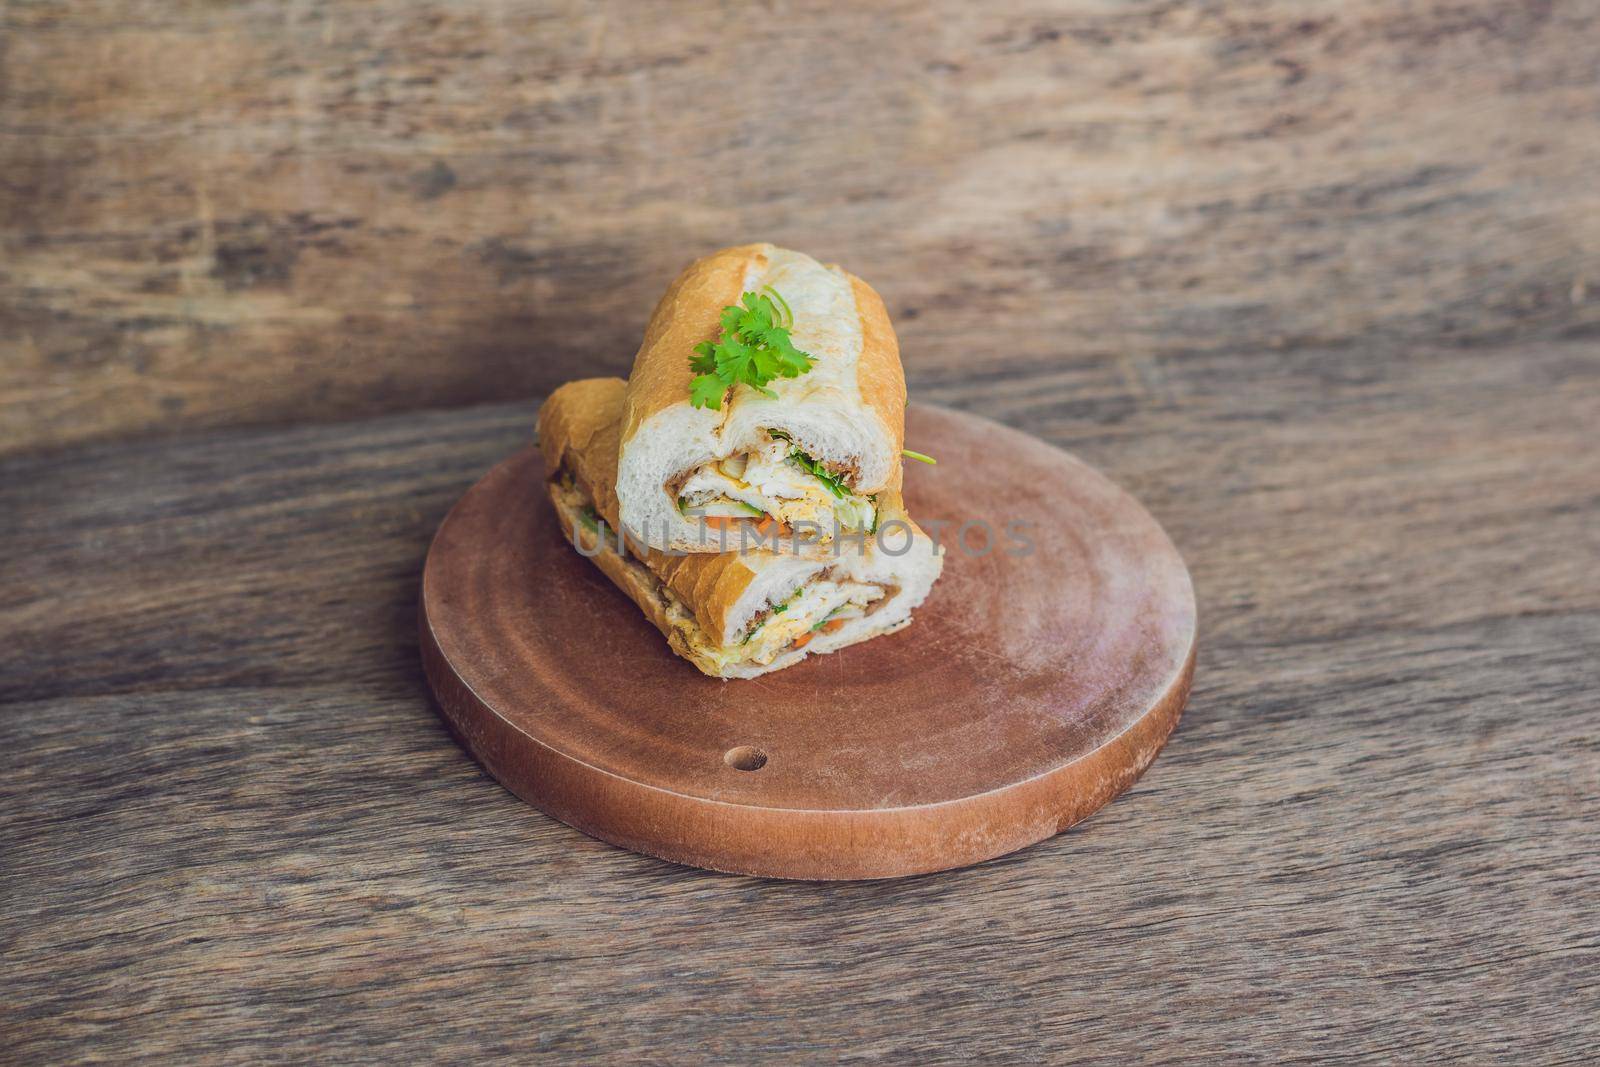 A delicious Vietnamese Bahn Mi sandwich on a wooden background.